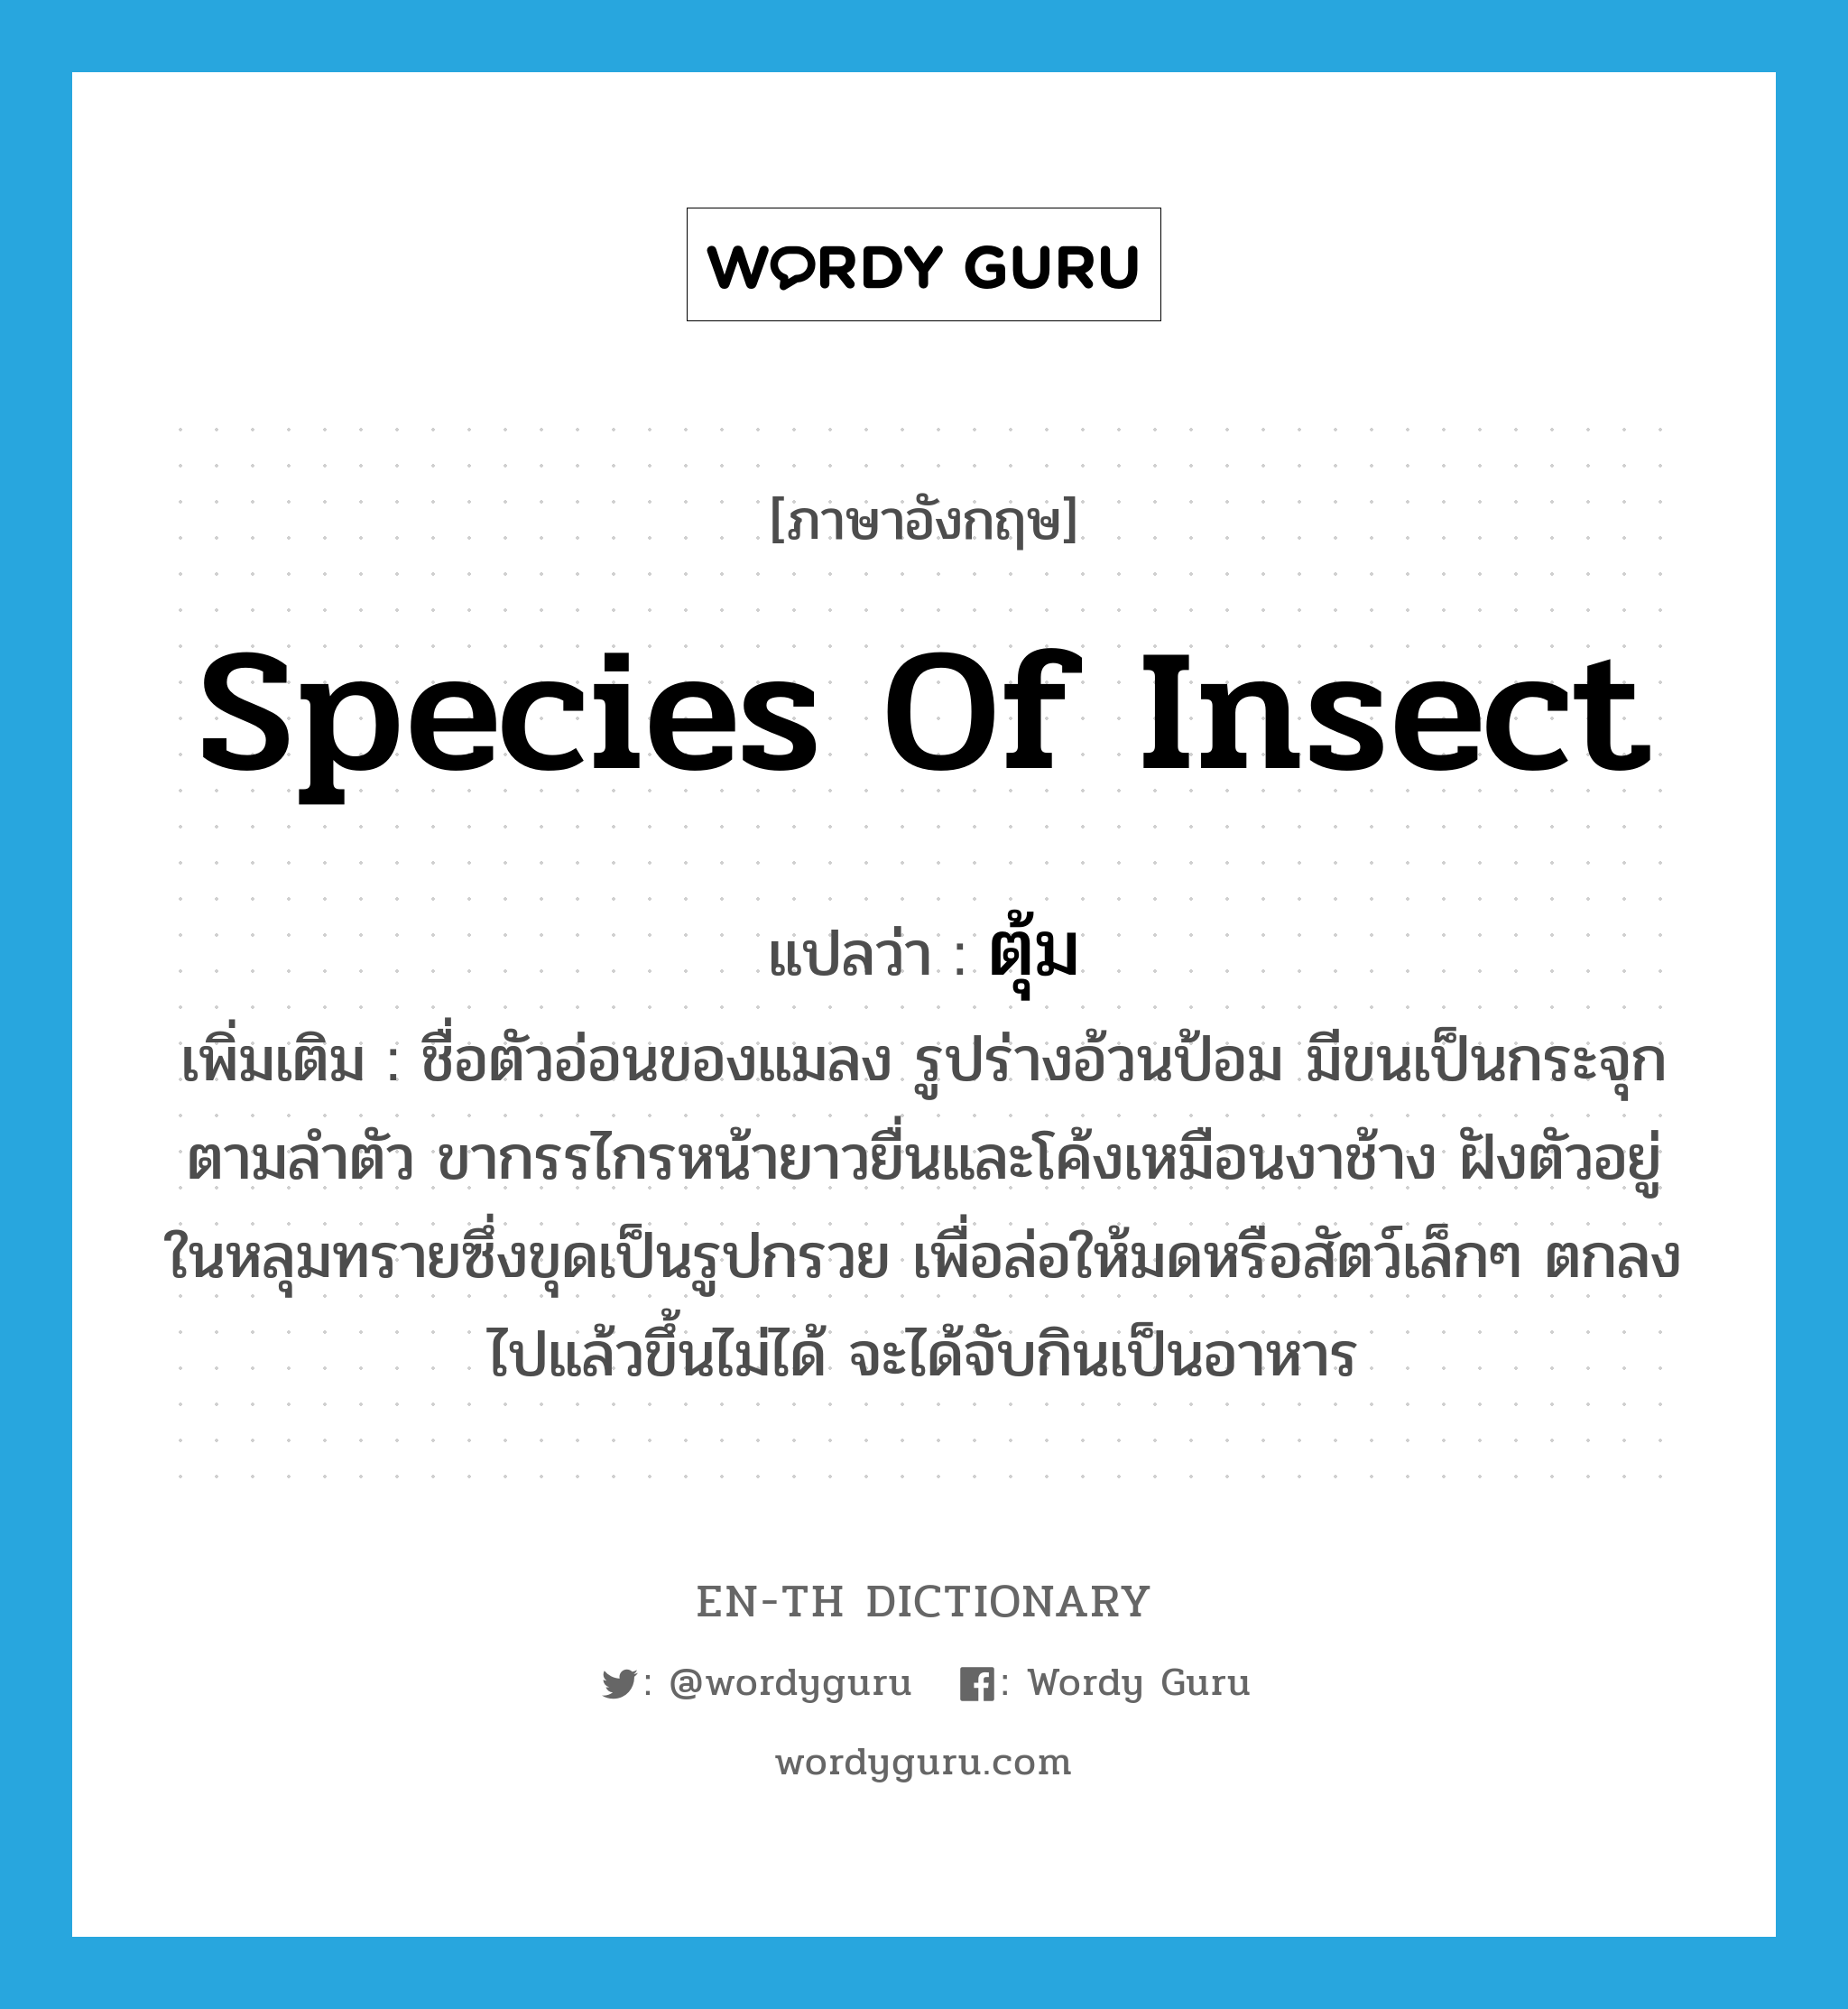 species of insect แปลว่า?, คำศัพท์ภาษาอังกฤษ species of insect แปลว่า ตุ้ม ประเภท N เพิ่มเติม ชื่อตัวอ่อนของแมลง รูปร่างอ้วนป้อม มีขนเป็นกระจุกตามลำตัว ขากรรไกรหน้ายาวยื่นและโค้งเหมือนงาช้าง ฝังตัวอยู่ในหลุมทรายซึ่งขุดเป็นรูปกรวย เพื่อล่อให้มดหรือสัตว์เล็กๆ ตกลงไปแล้วขึ้นไม่ได้ จะได้จับกินเป็นอาหาร หมวด N